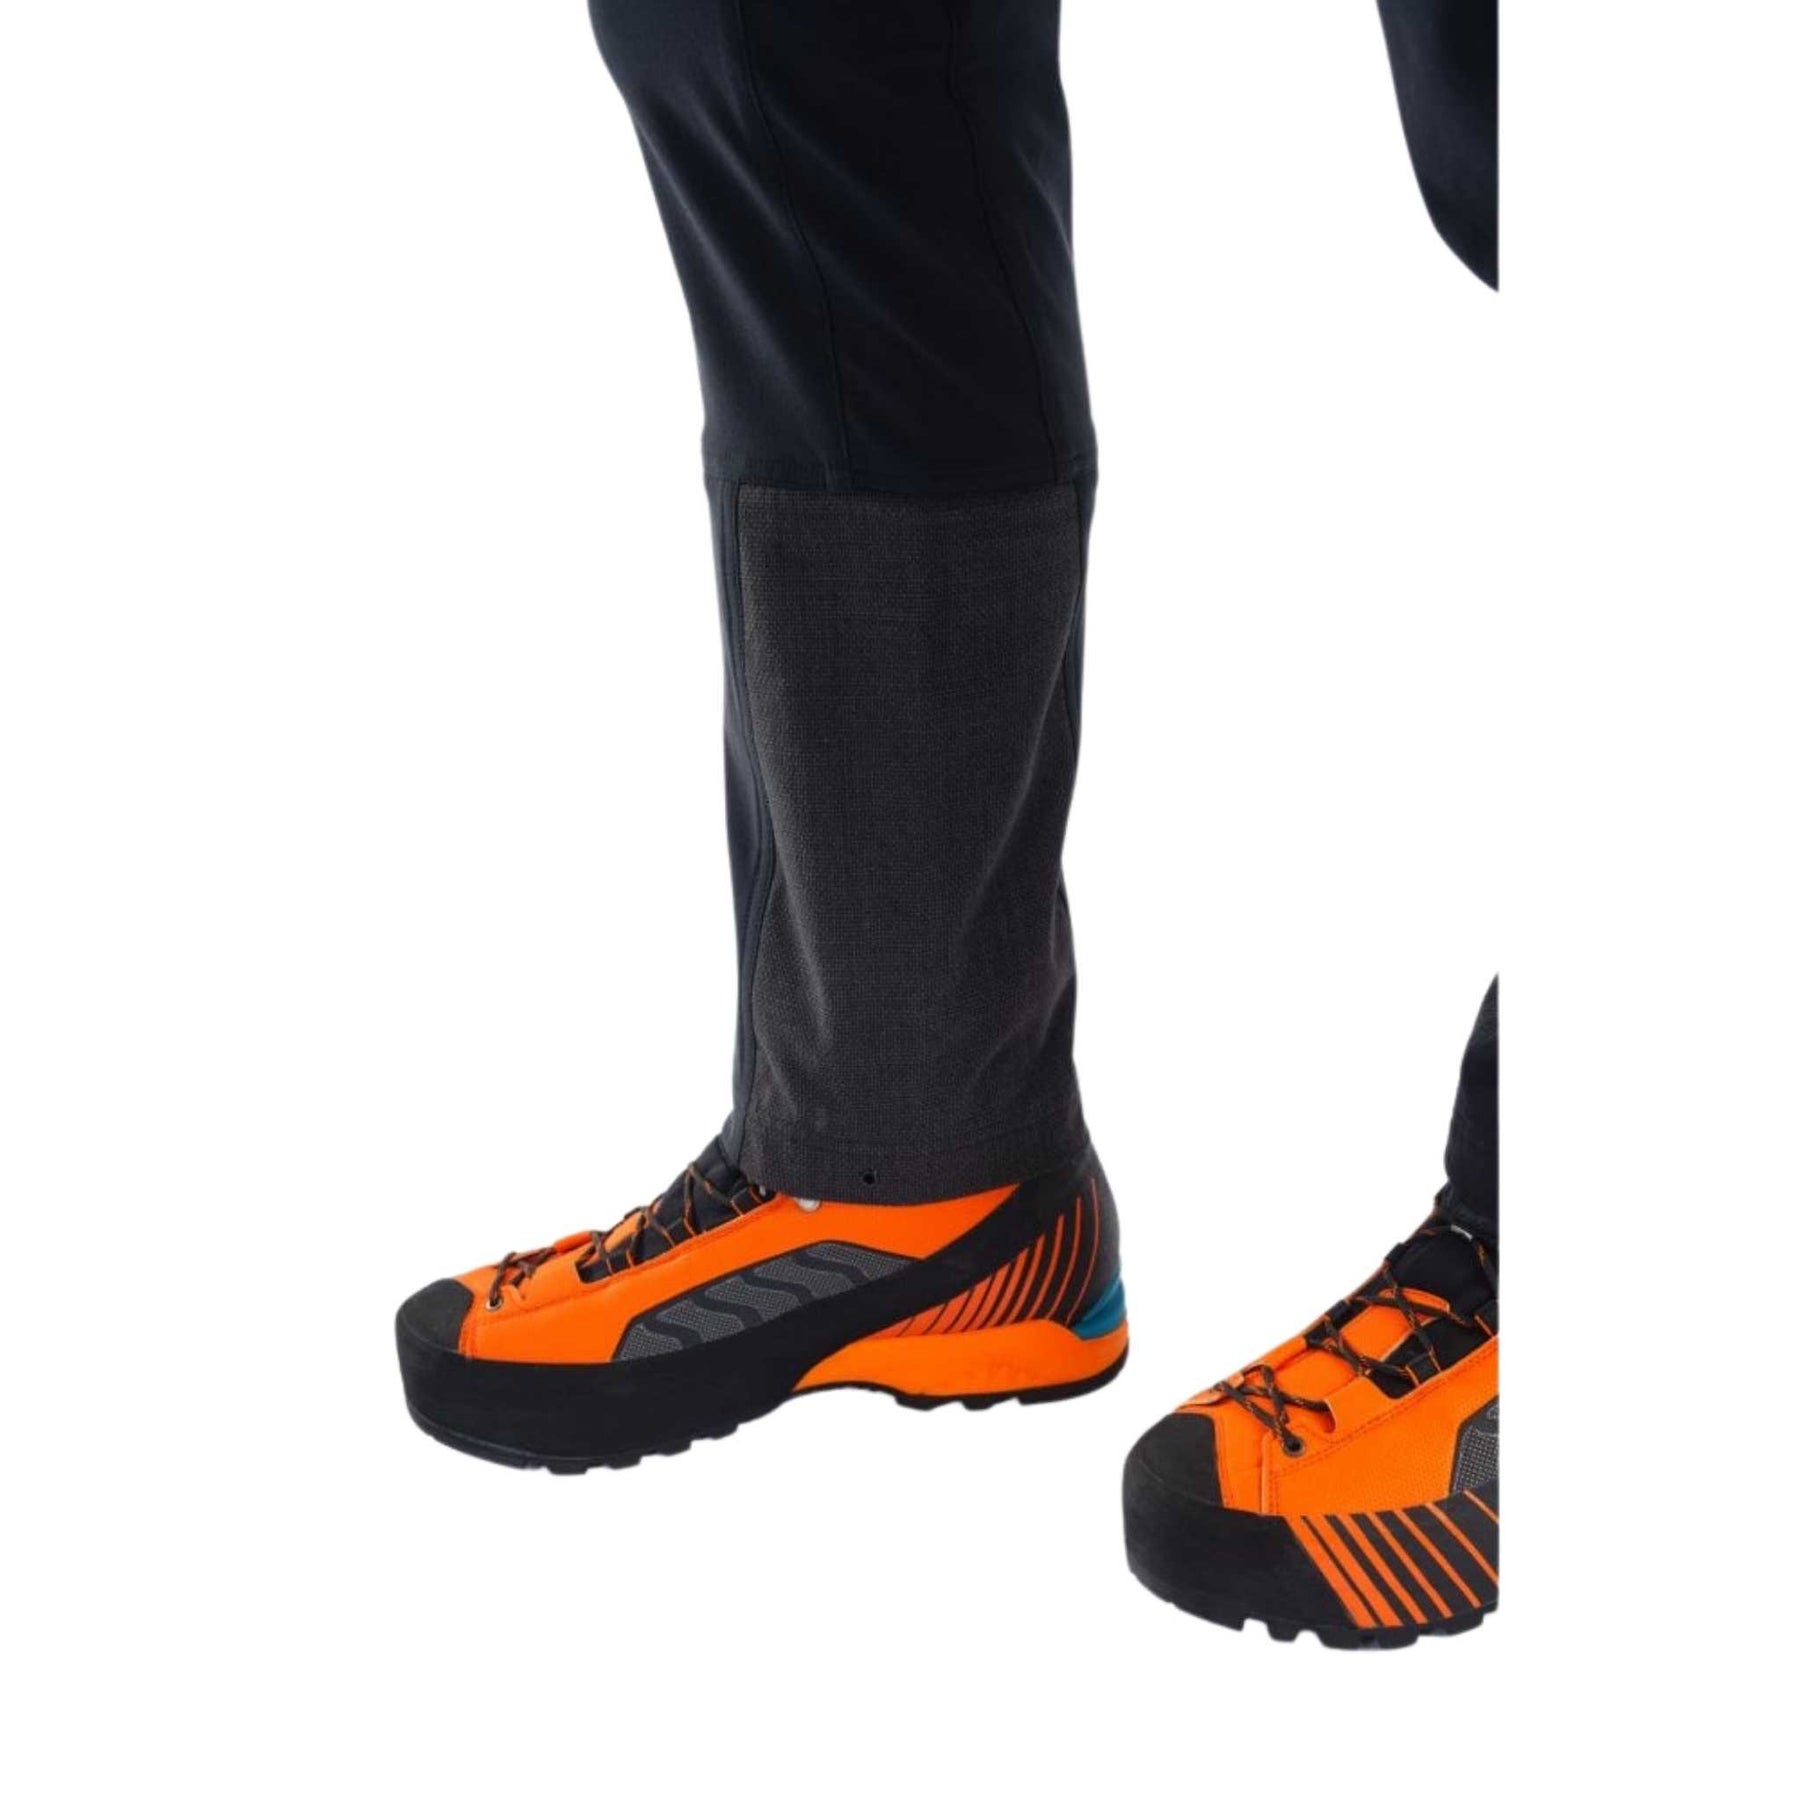 Montane, Gradient Pants Regular Leg - GearHub Sports